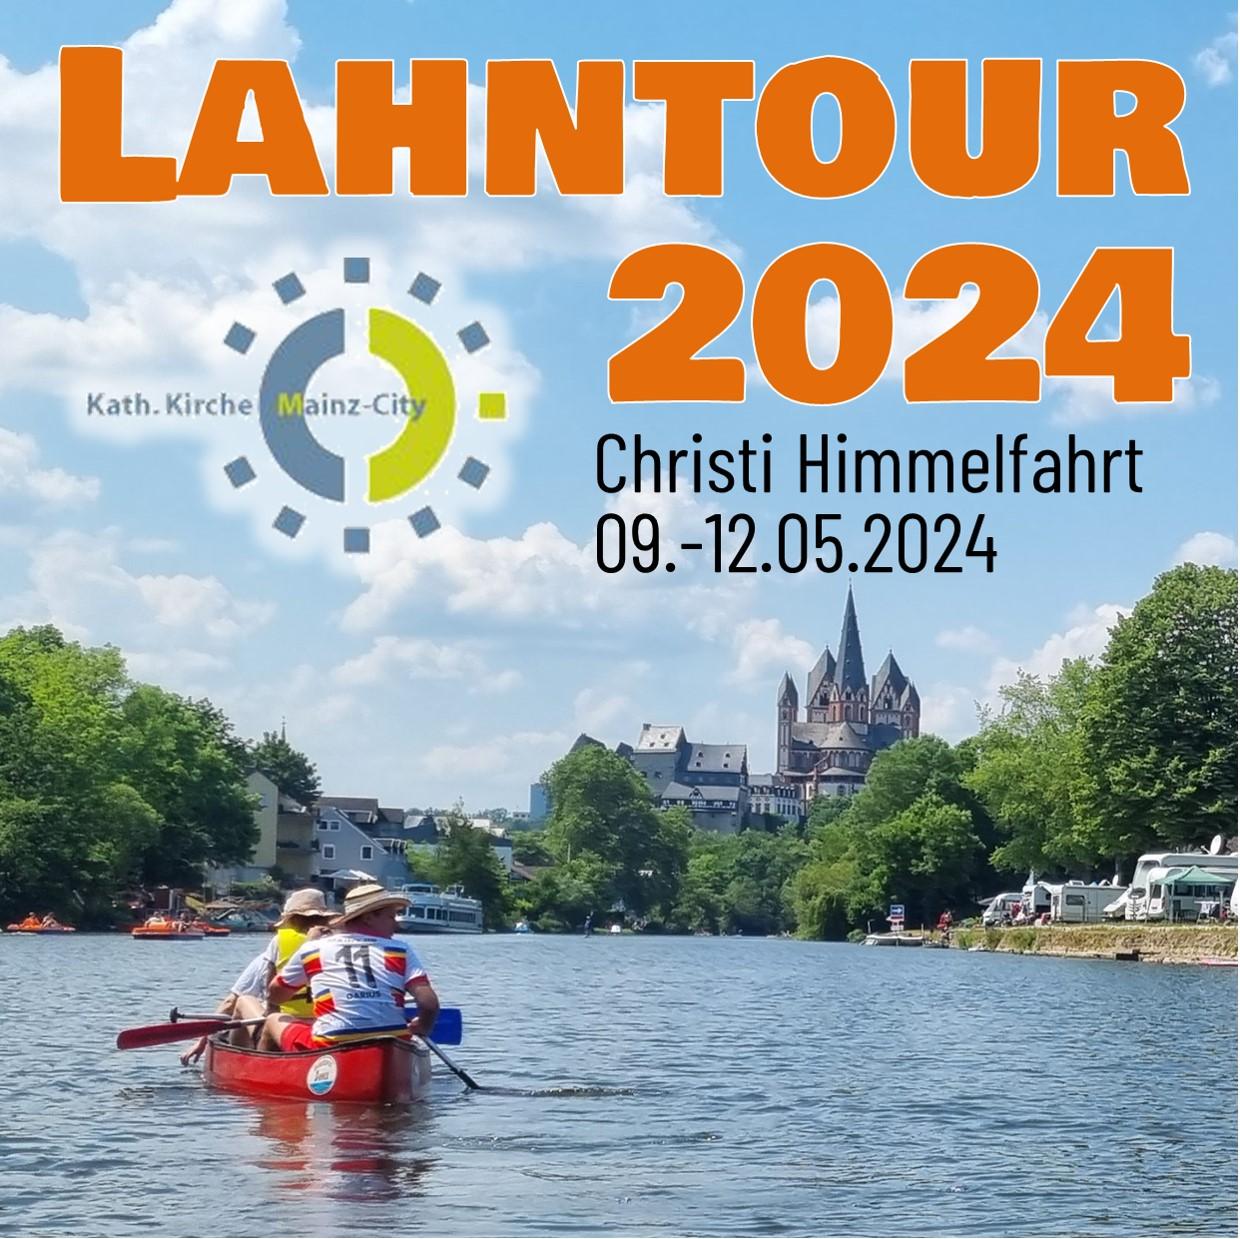 Lahntour 2024